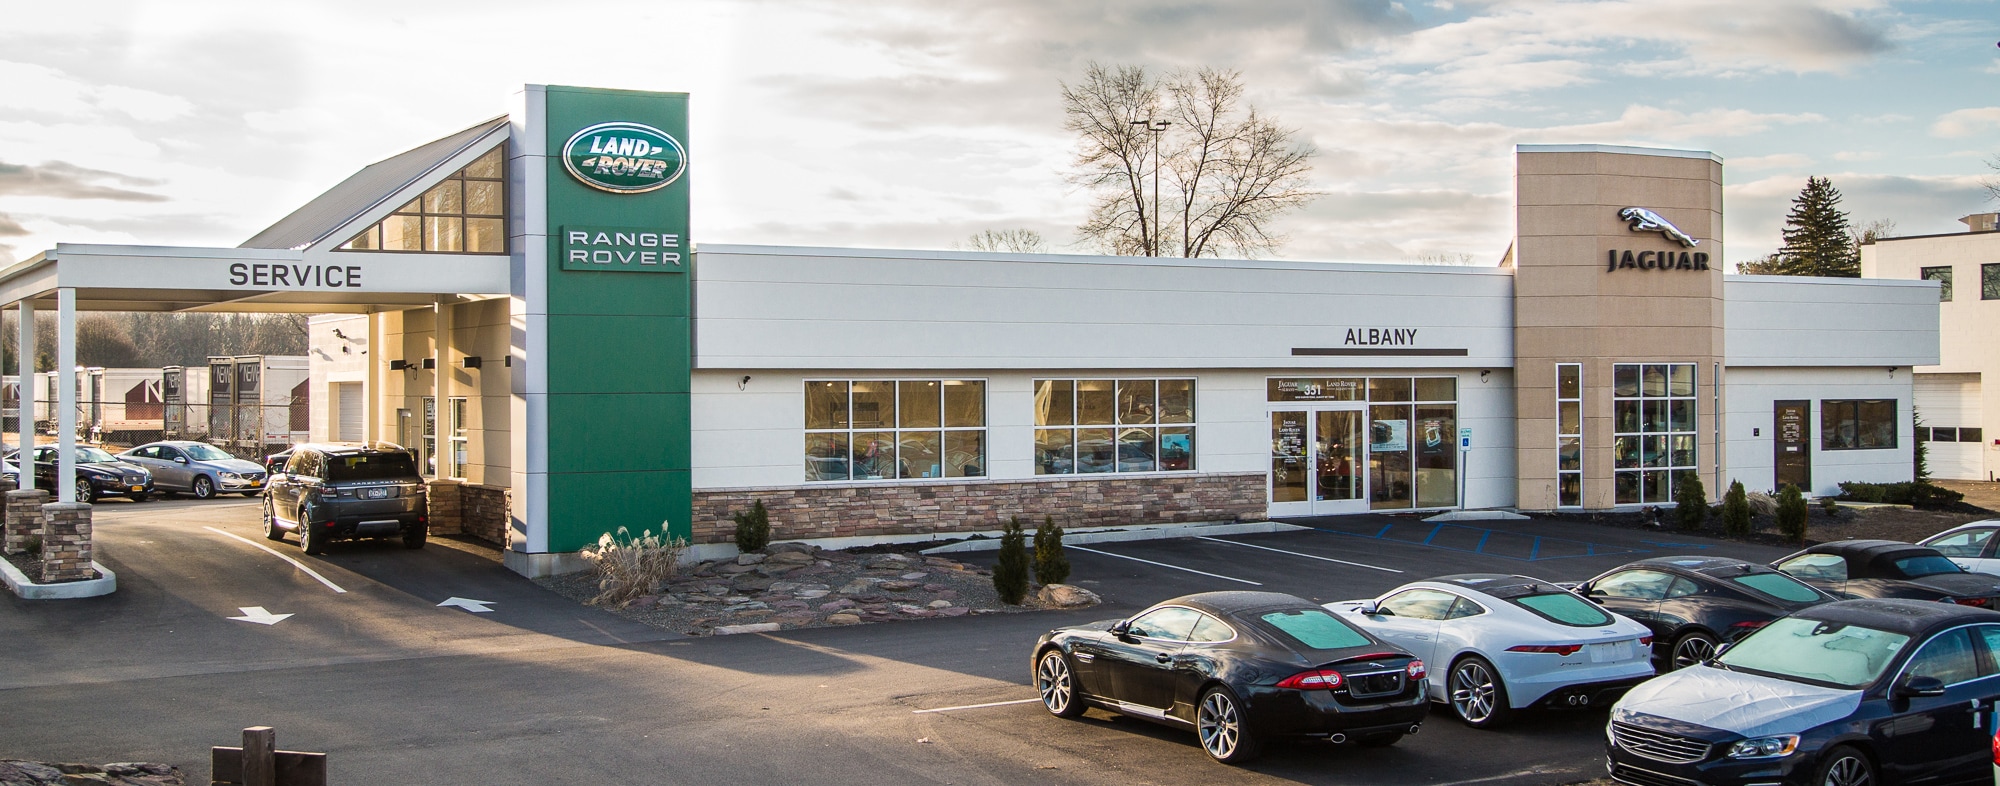 Jaguar Albany | New Jaguar Dealership in Albany, NY